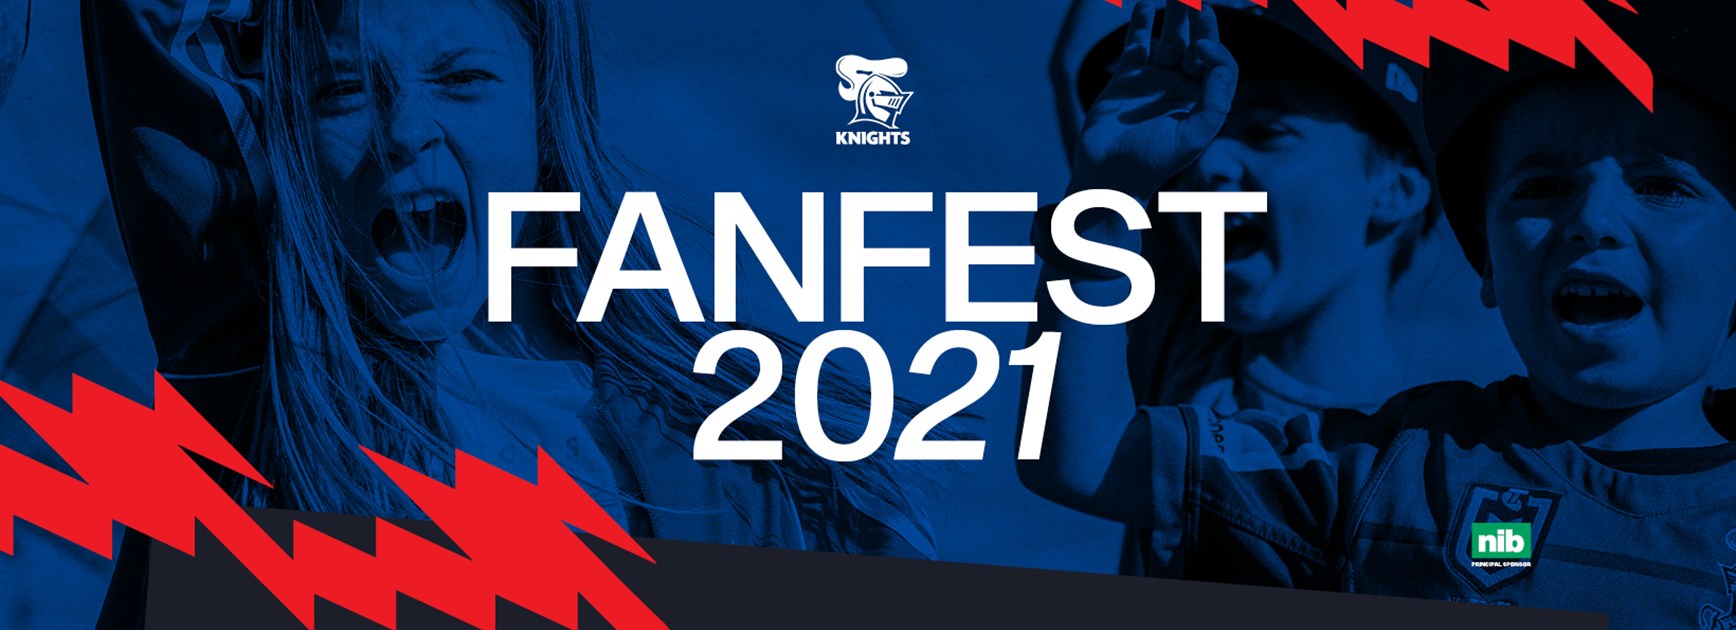 2021 FanFest confirmed